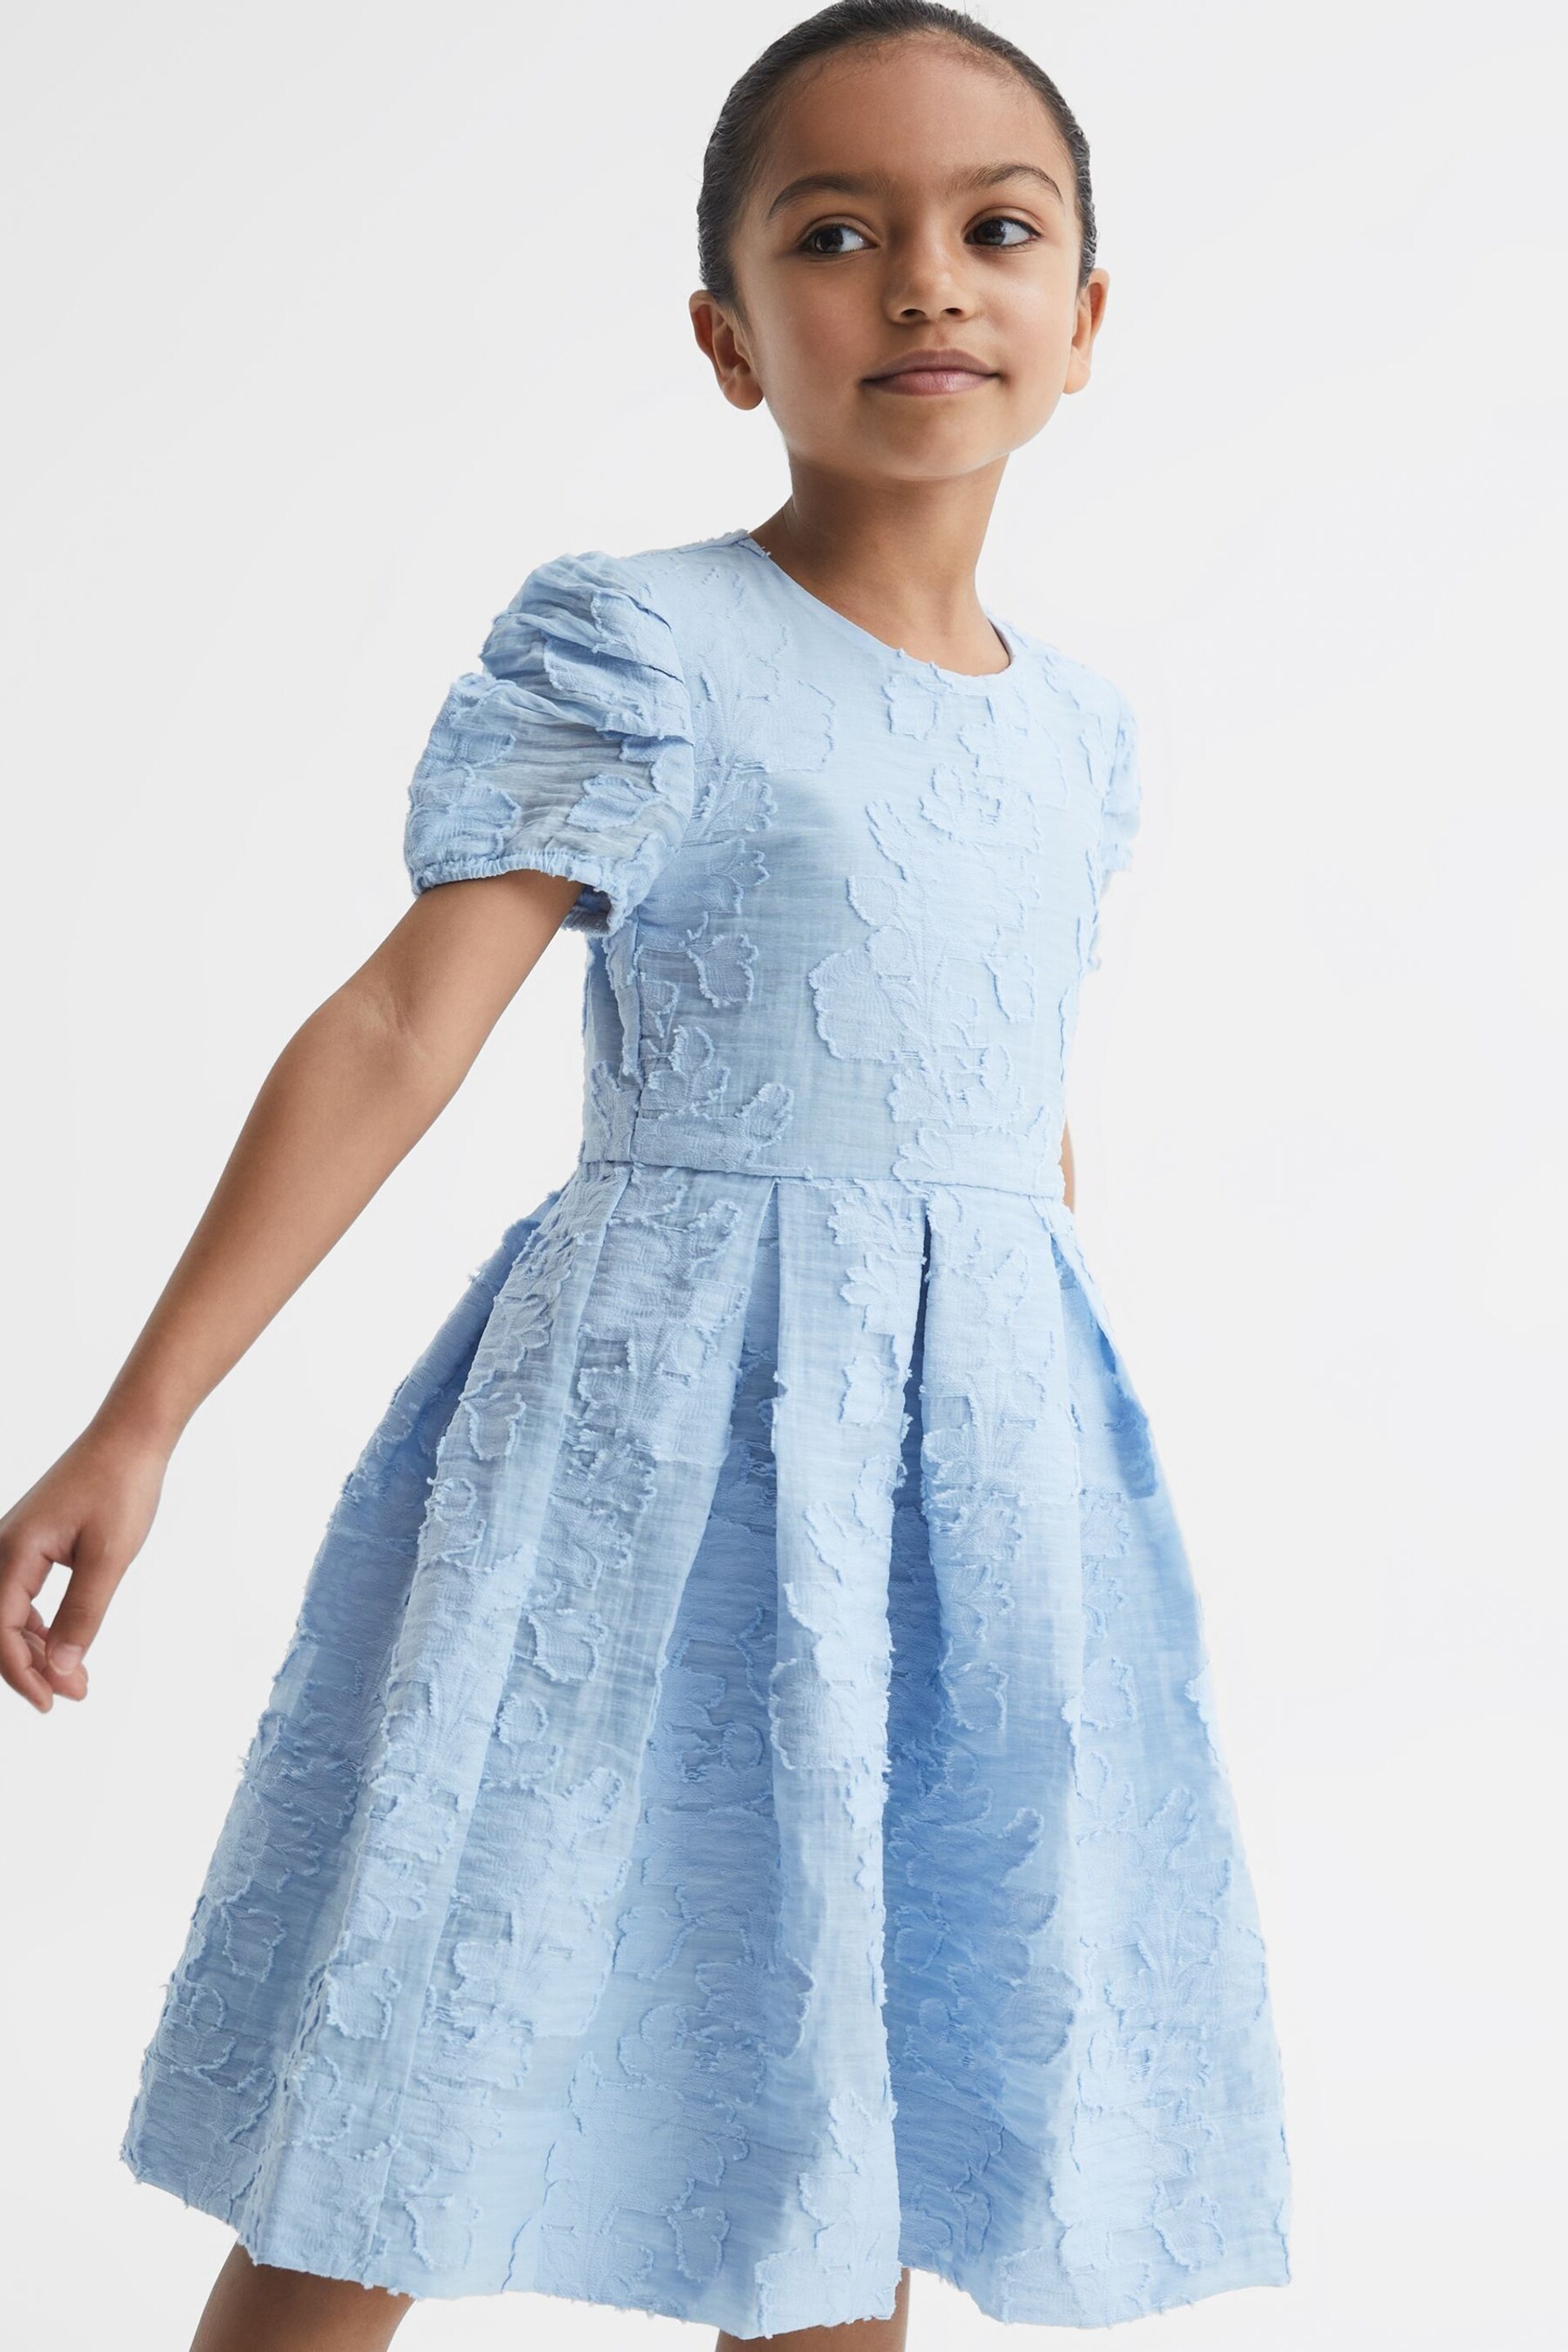 Reiss Blue Amalie Junior Floral Print Textured Dress - Image 1 of 6